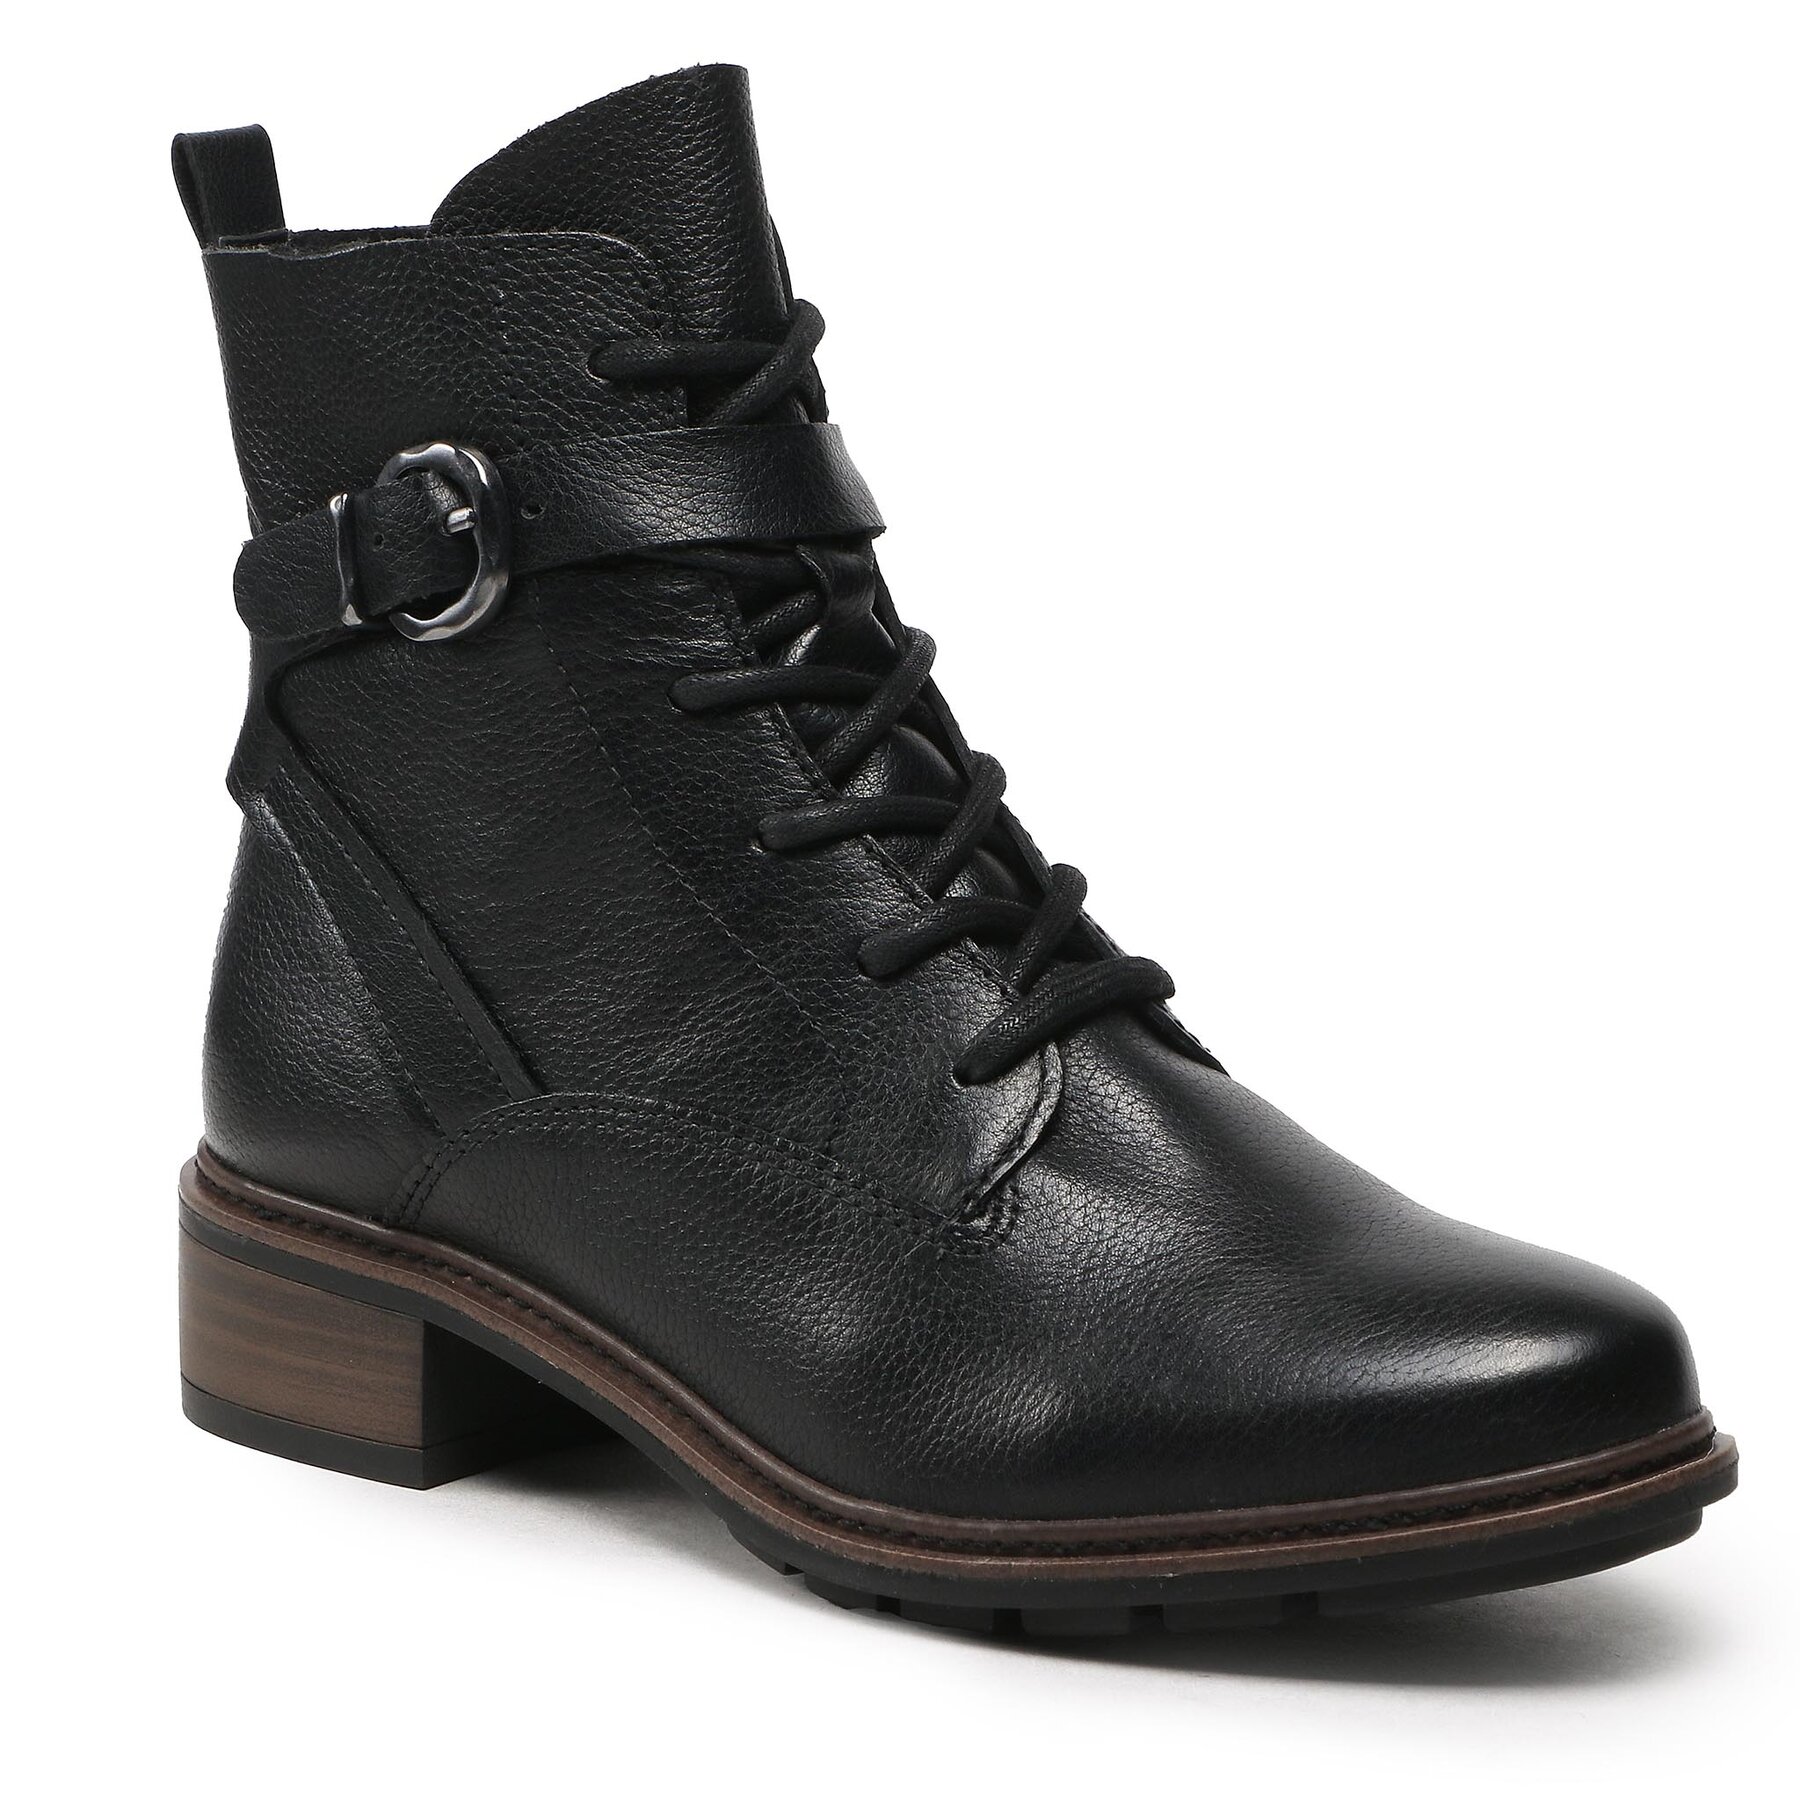 Botine Tamaris 1-25856-29 Black Leather 003